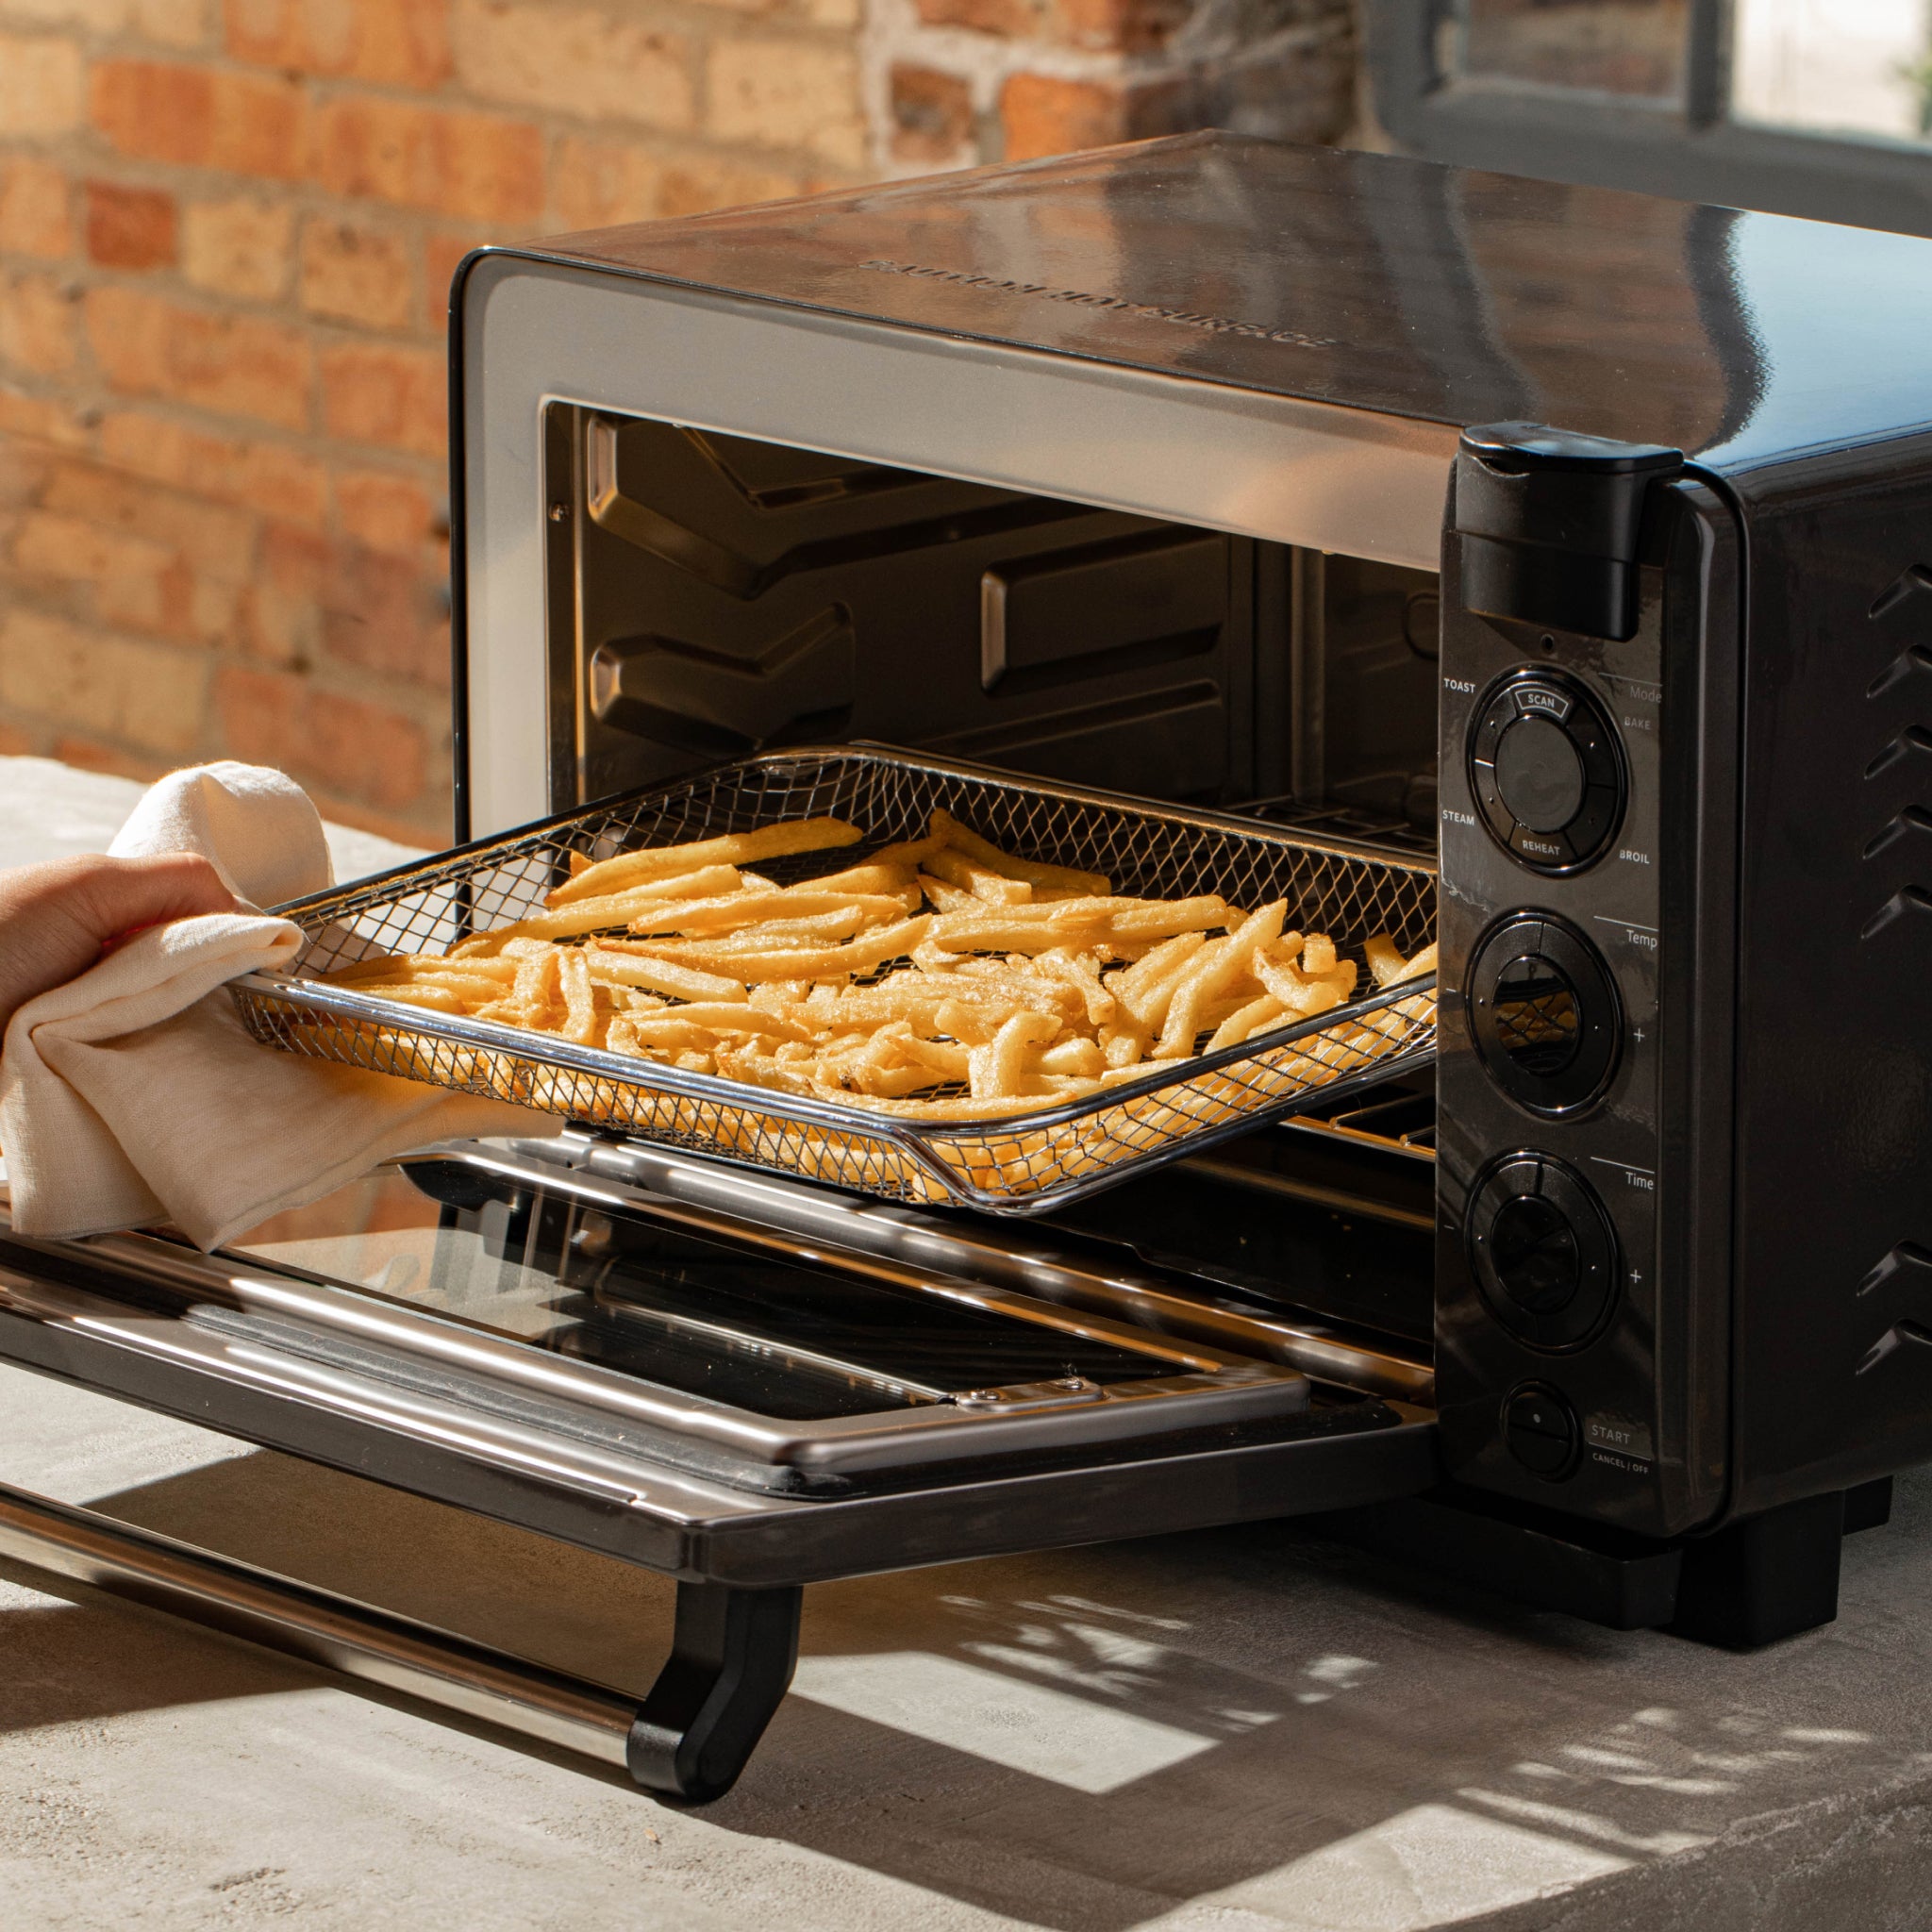  Digital 5.5 Quart Air Fryer Oven with Flat Basket